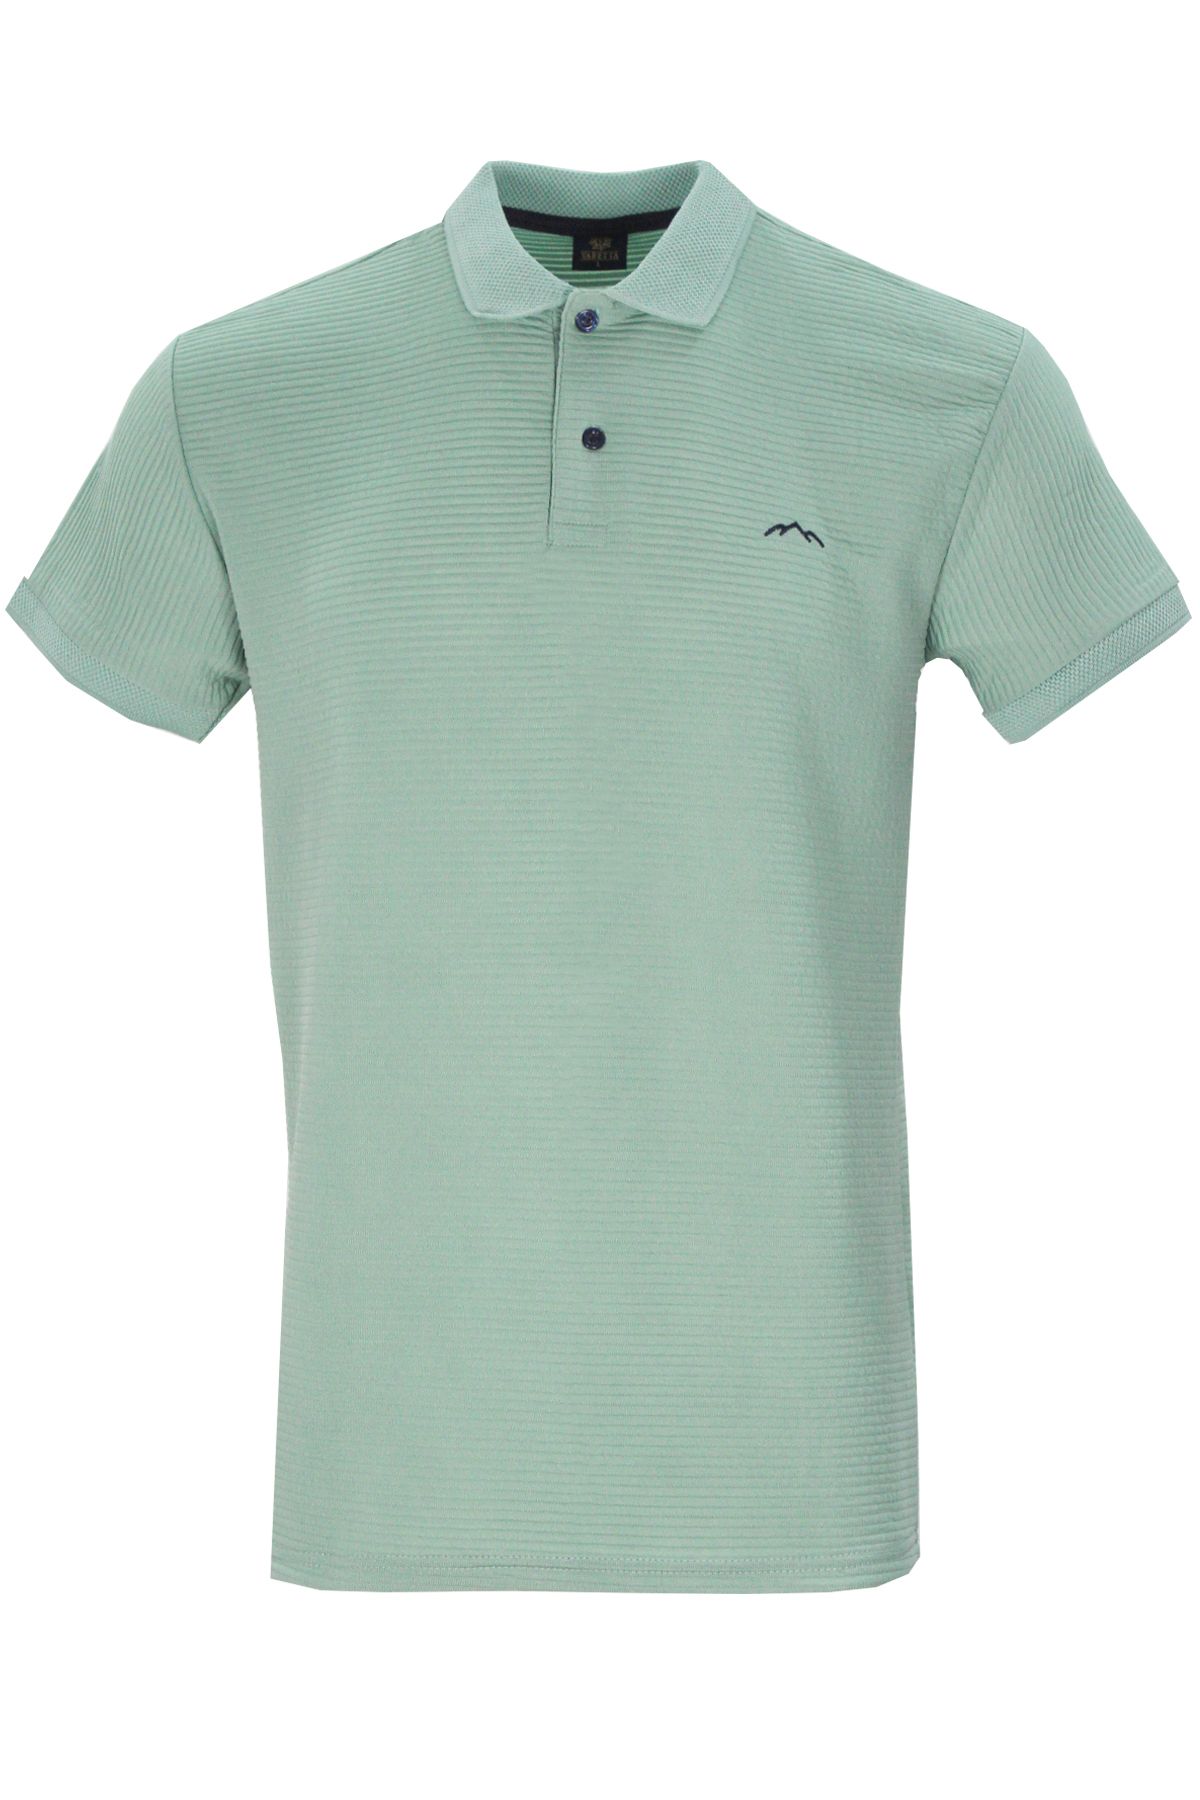 Varetta Erkek Mint Yeşili Polo Yaka Yazlık Pamuklu Kısa Kollu T shirt